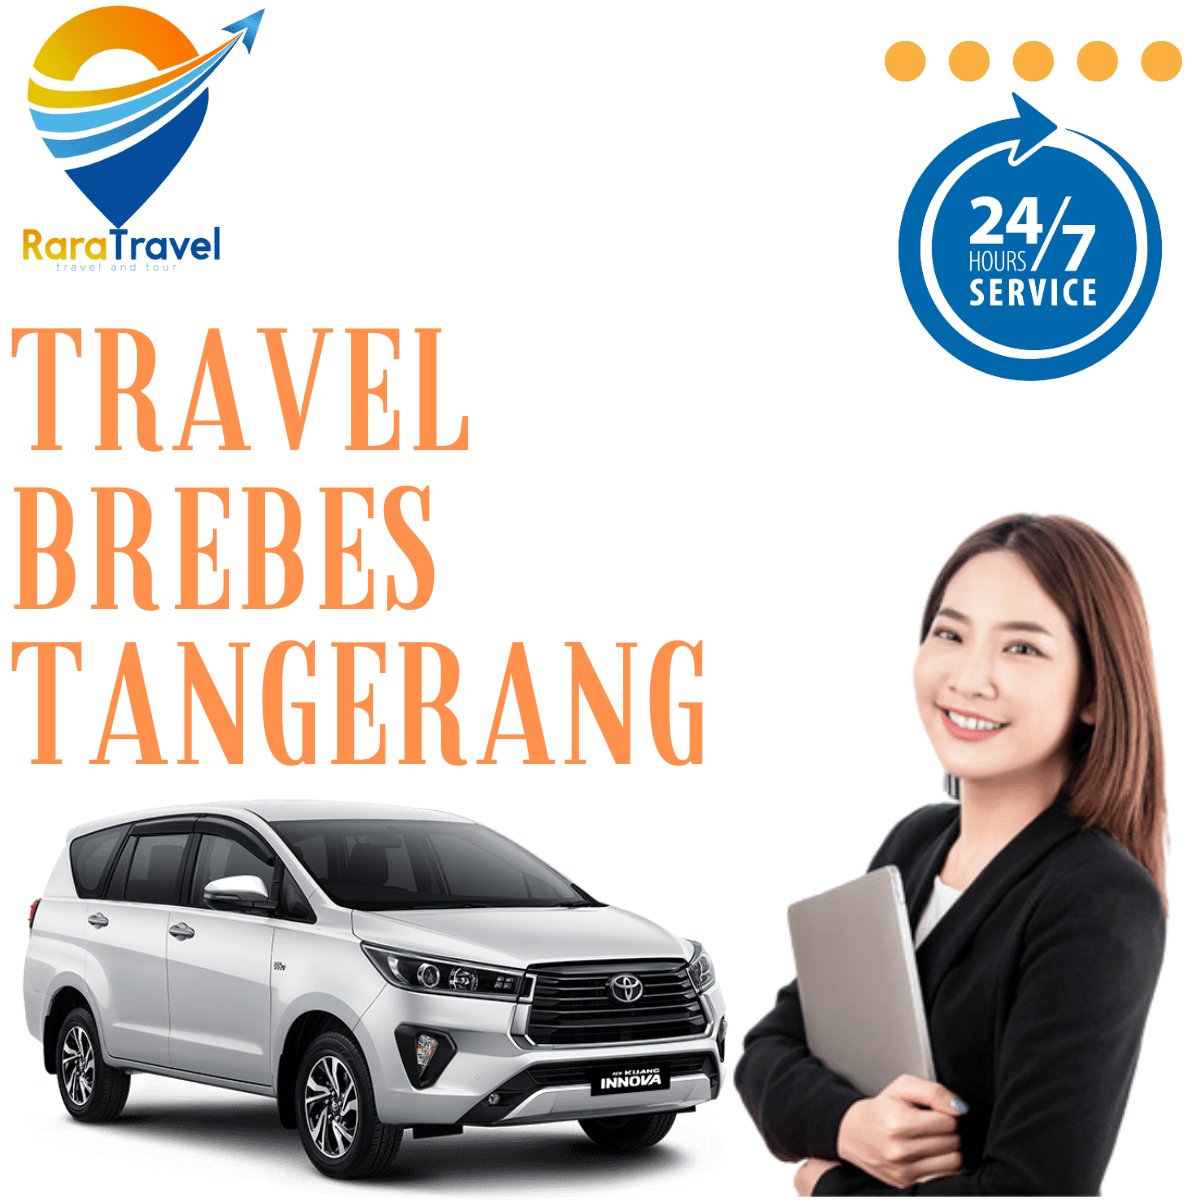 Travel Brebes Tangerang Hiace Harga Tiket Murah via Toll